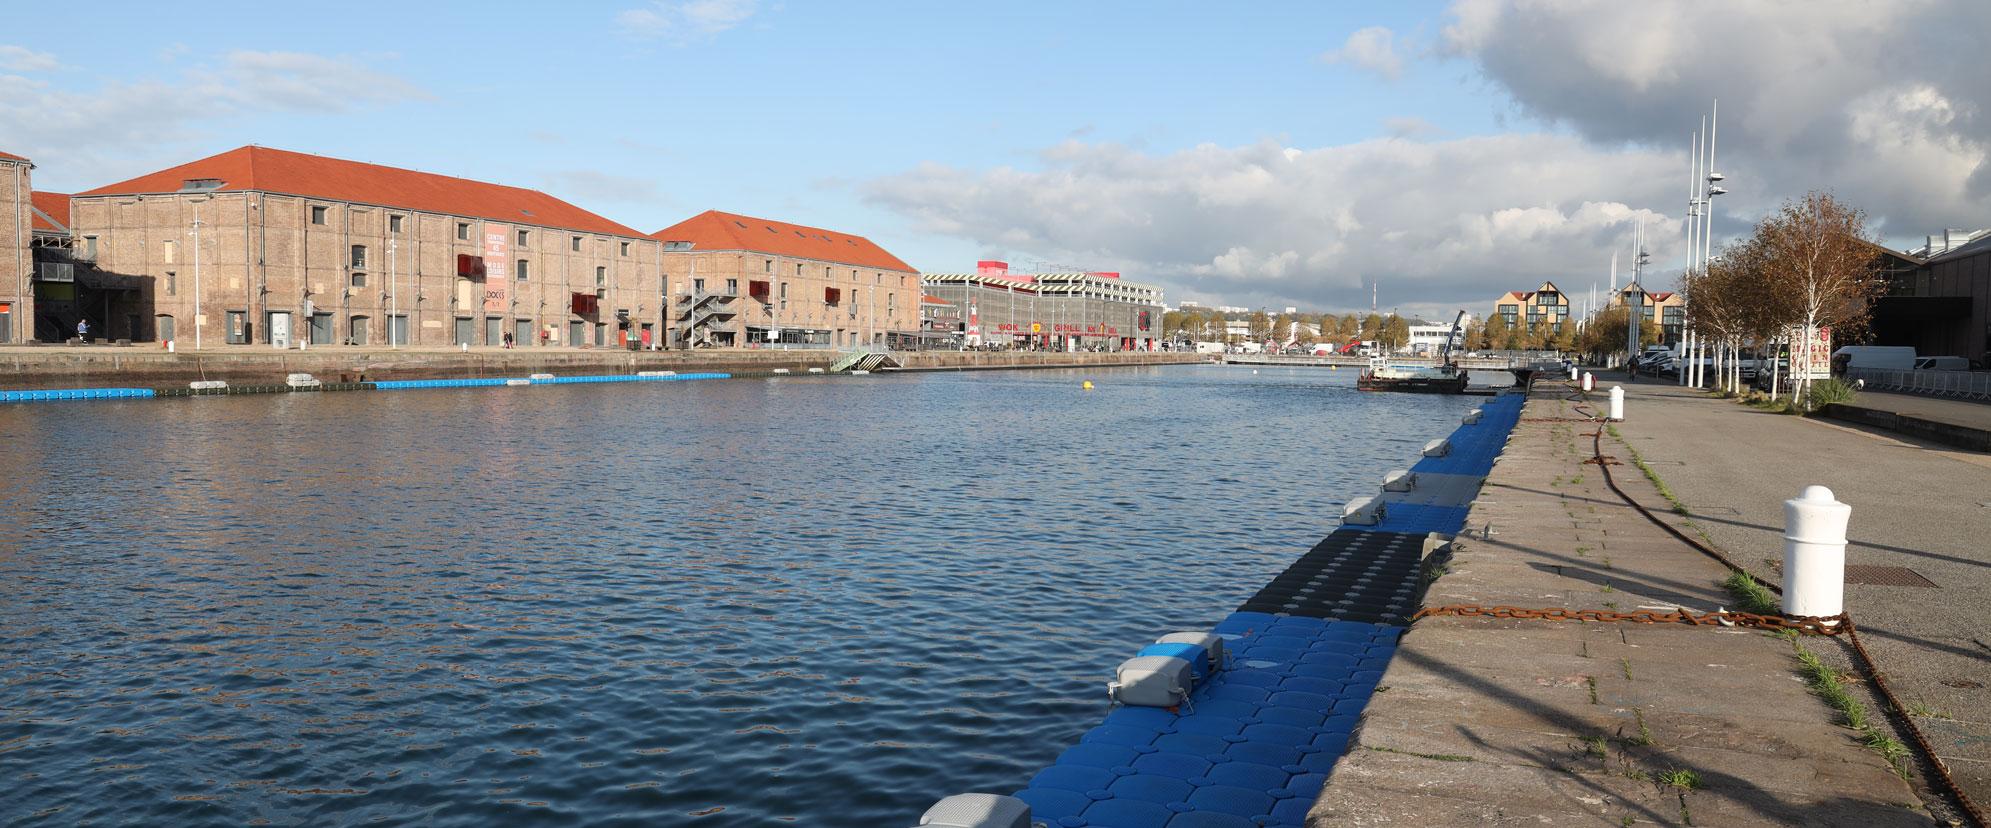 Docks Vauban et bassin Vatine, Le Havre